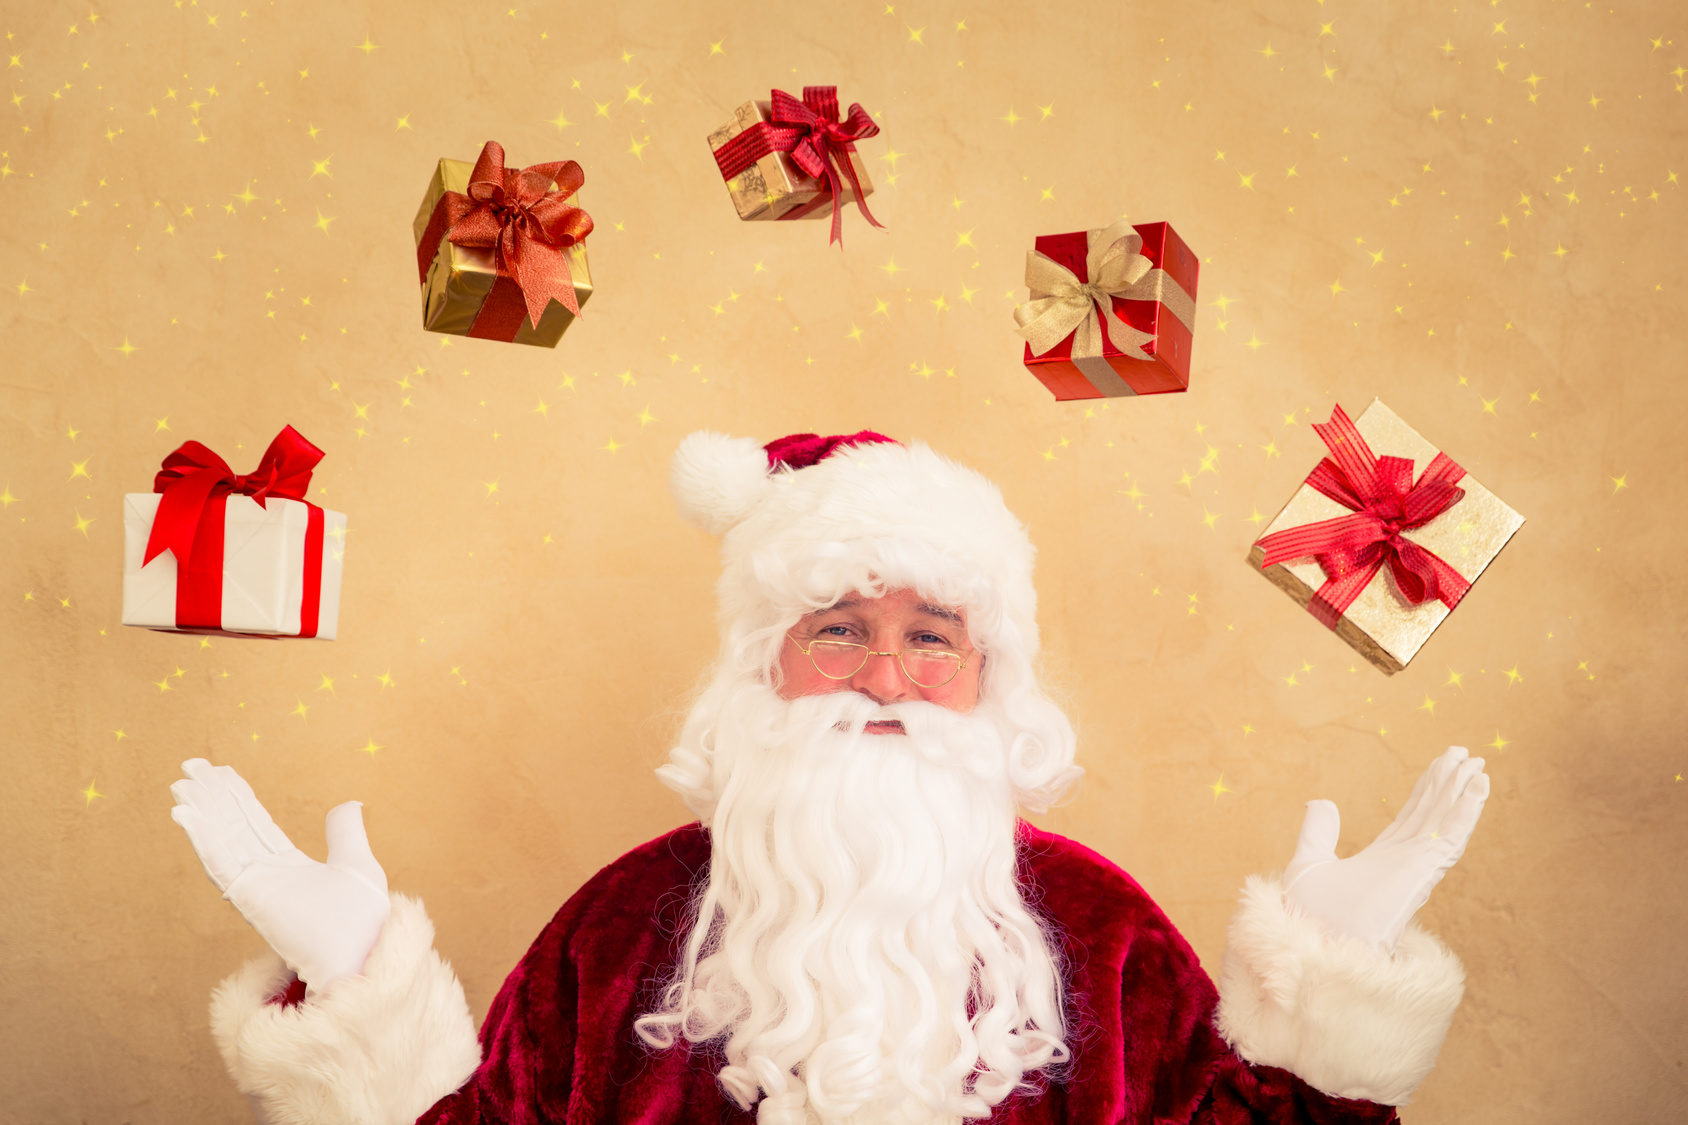 Santa's lists revealed!